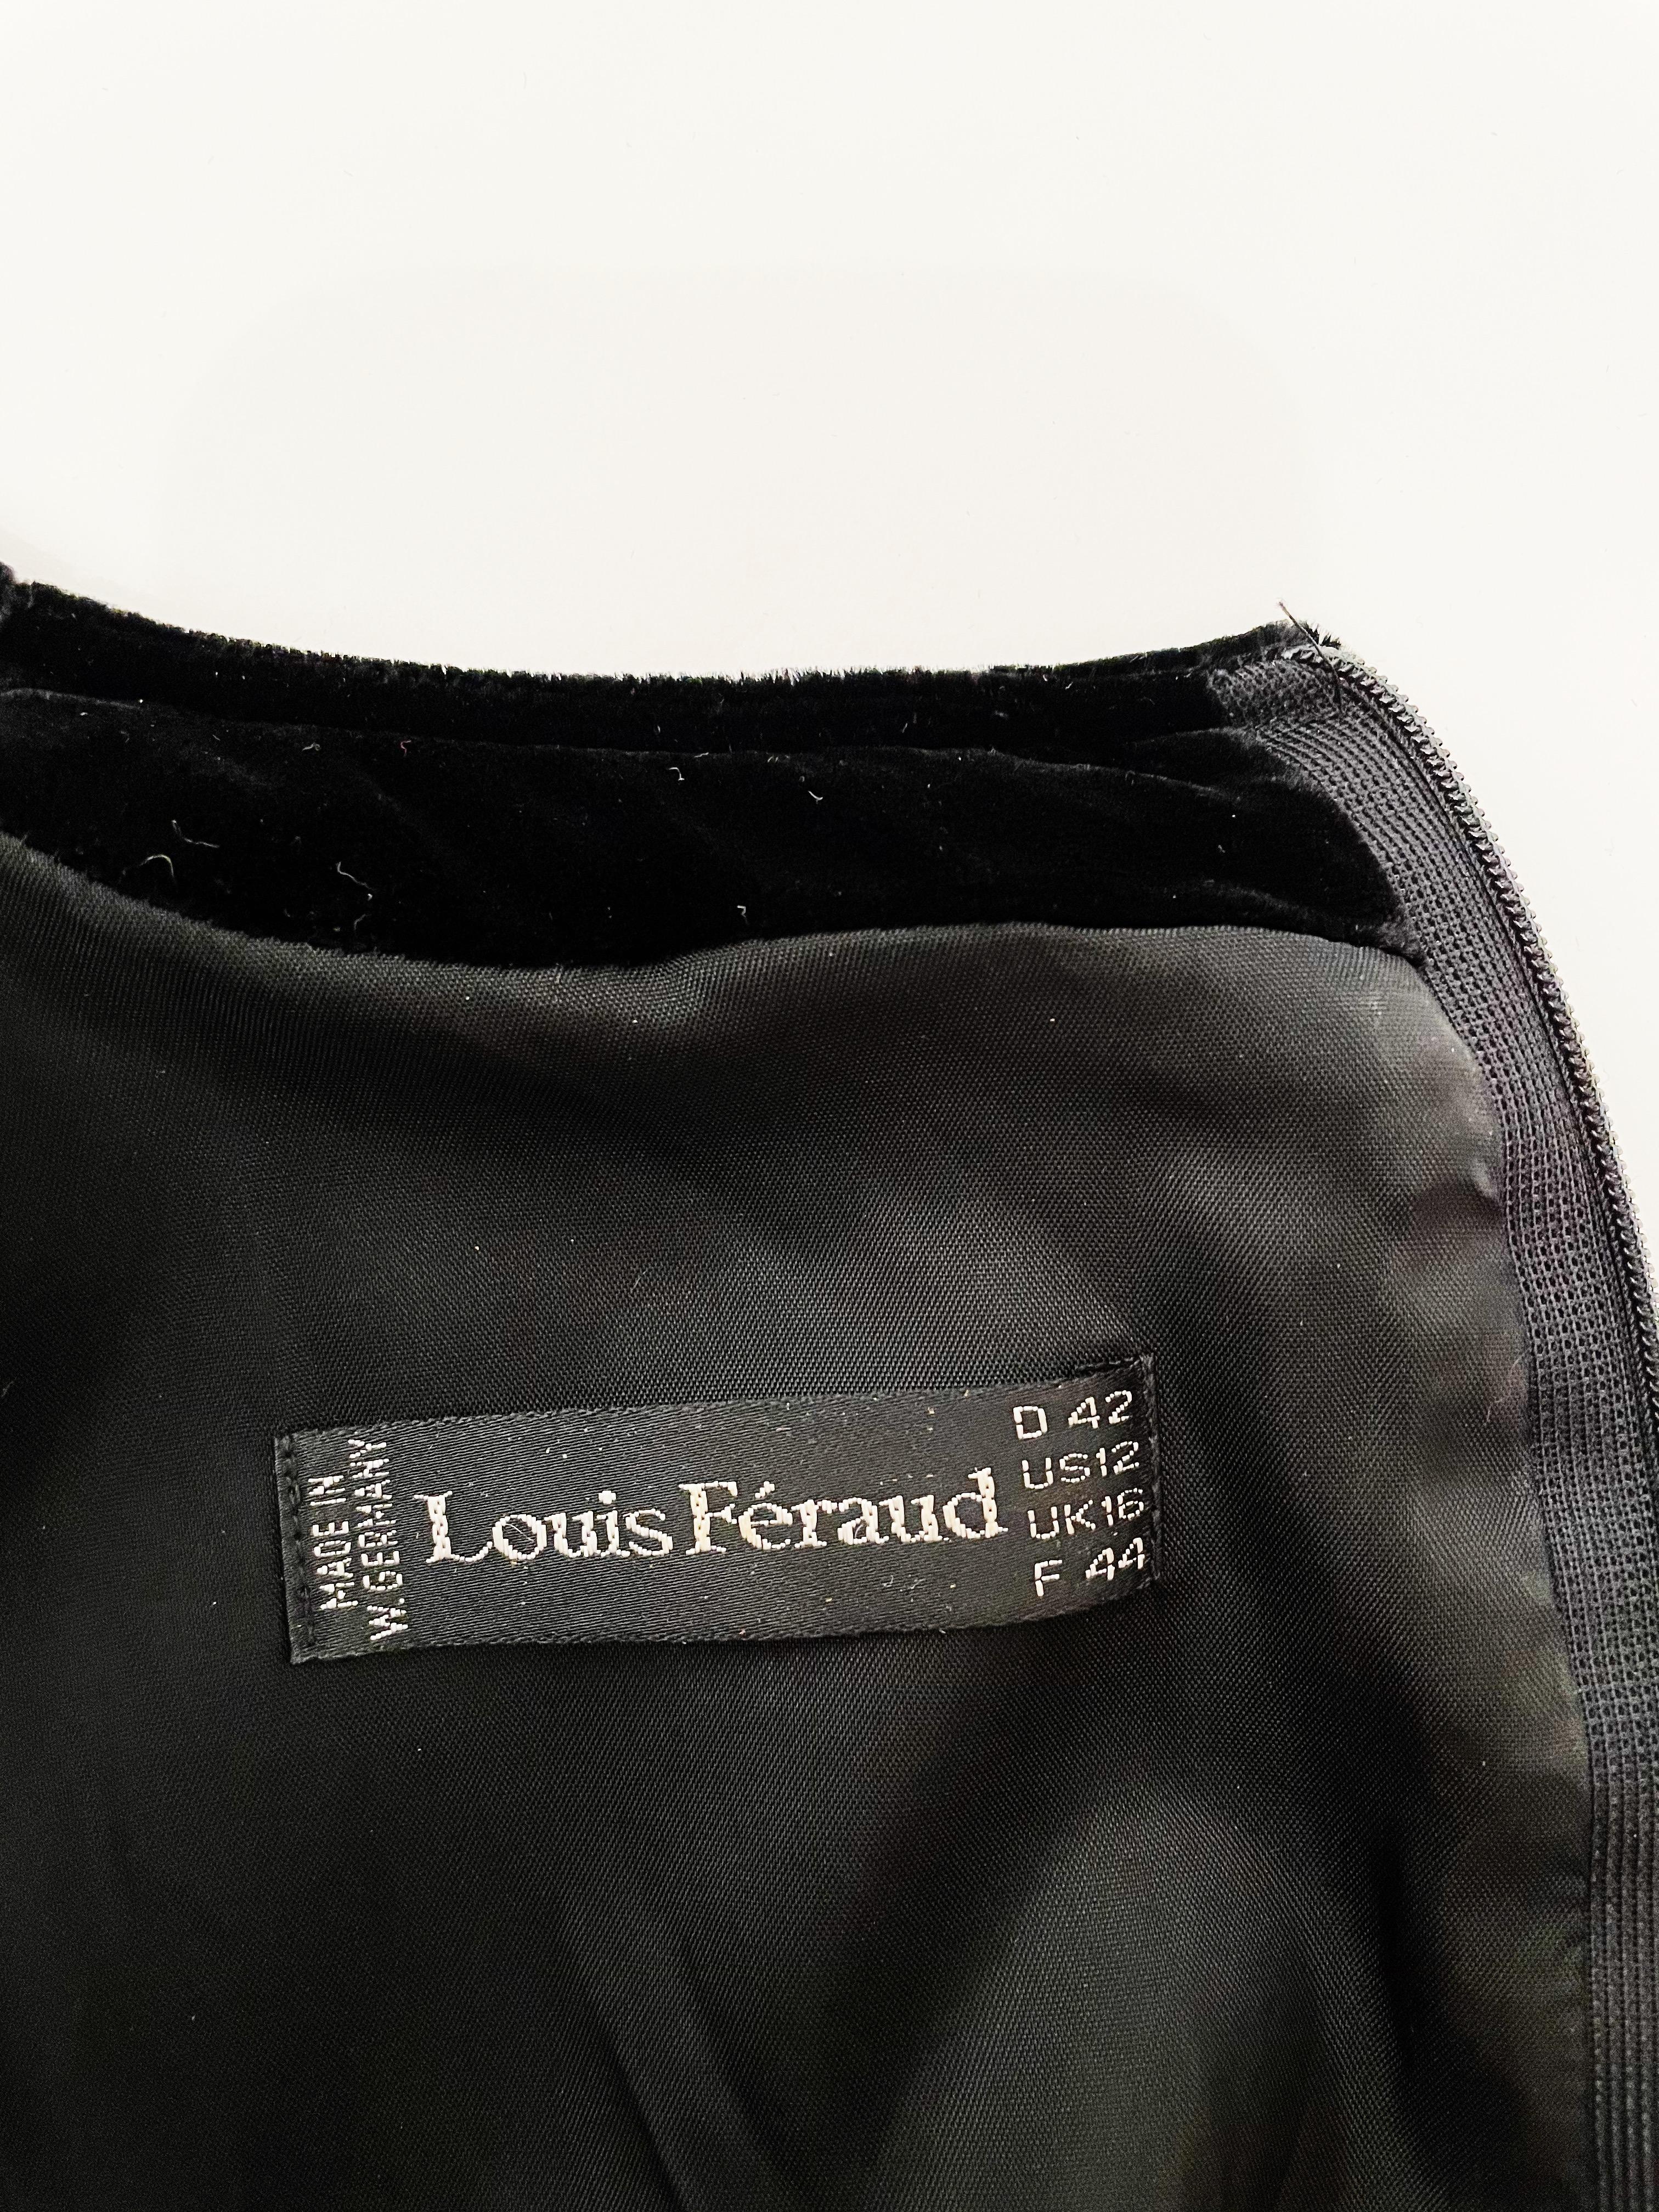 Louis Feraud Black Polka Dot Dress  For Sale 4